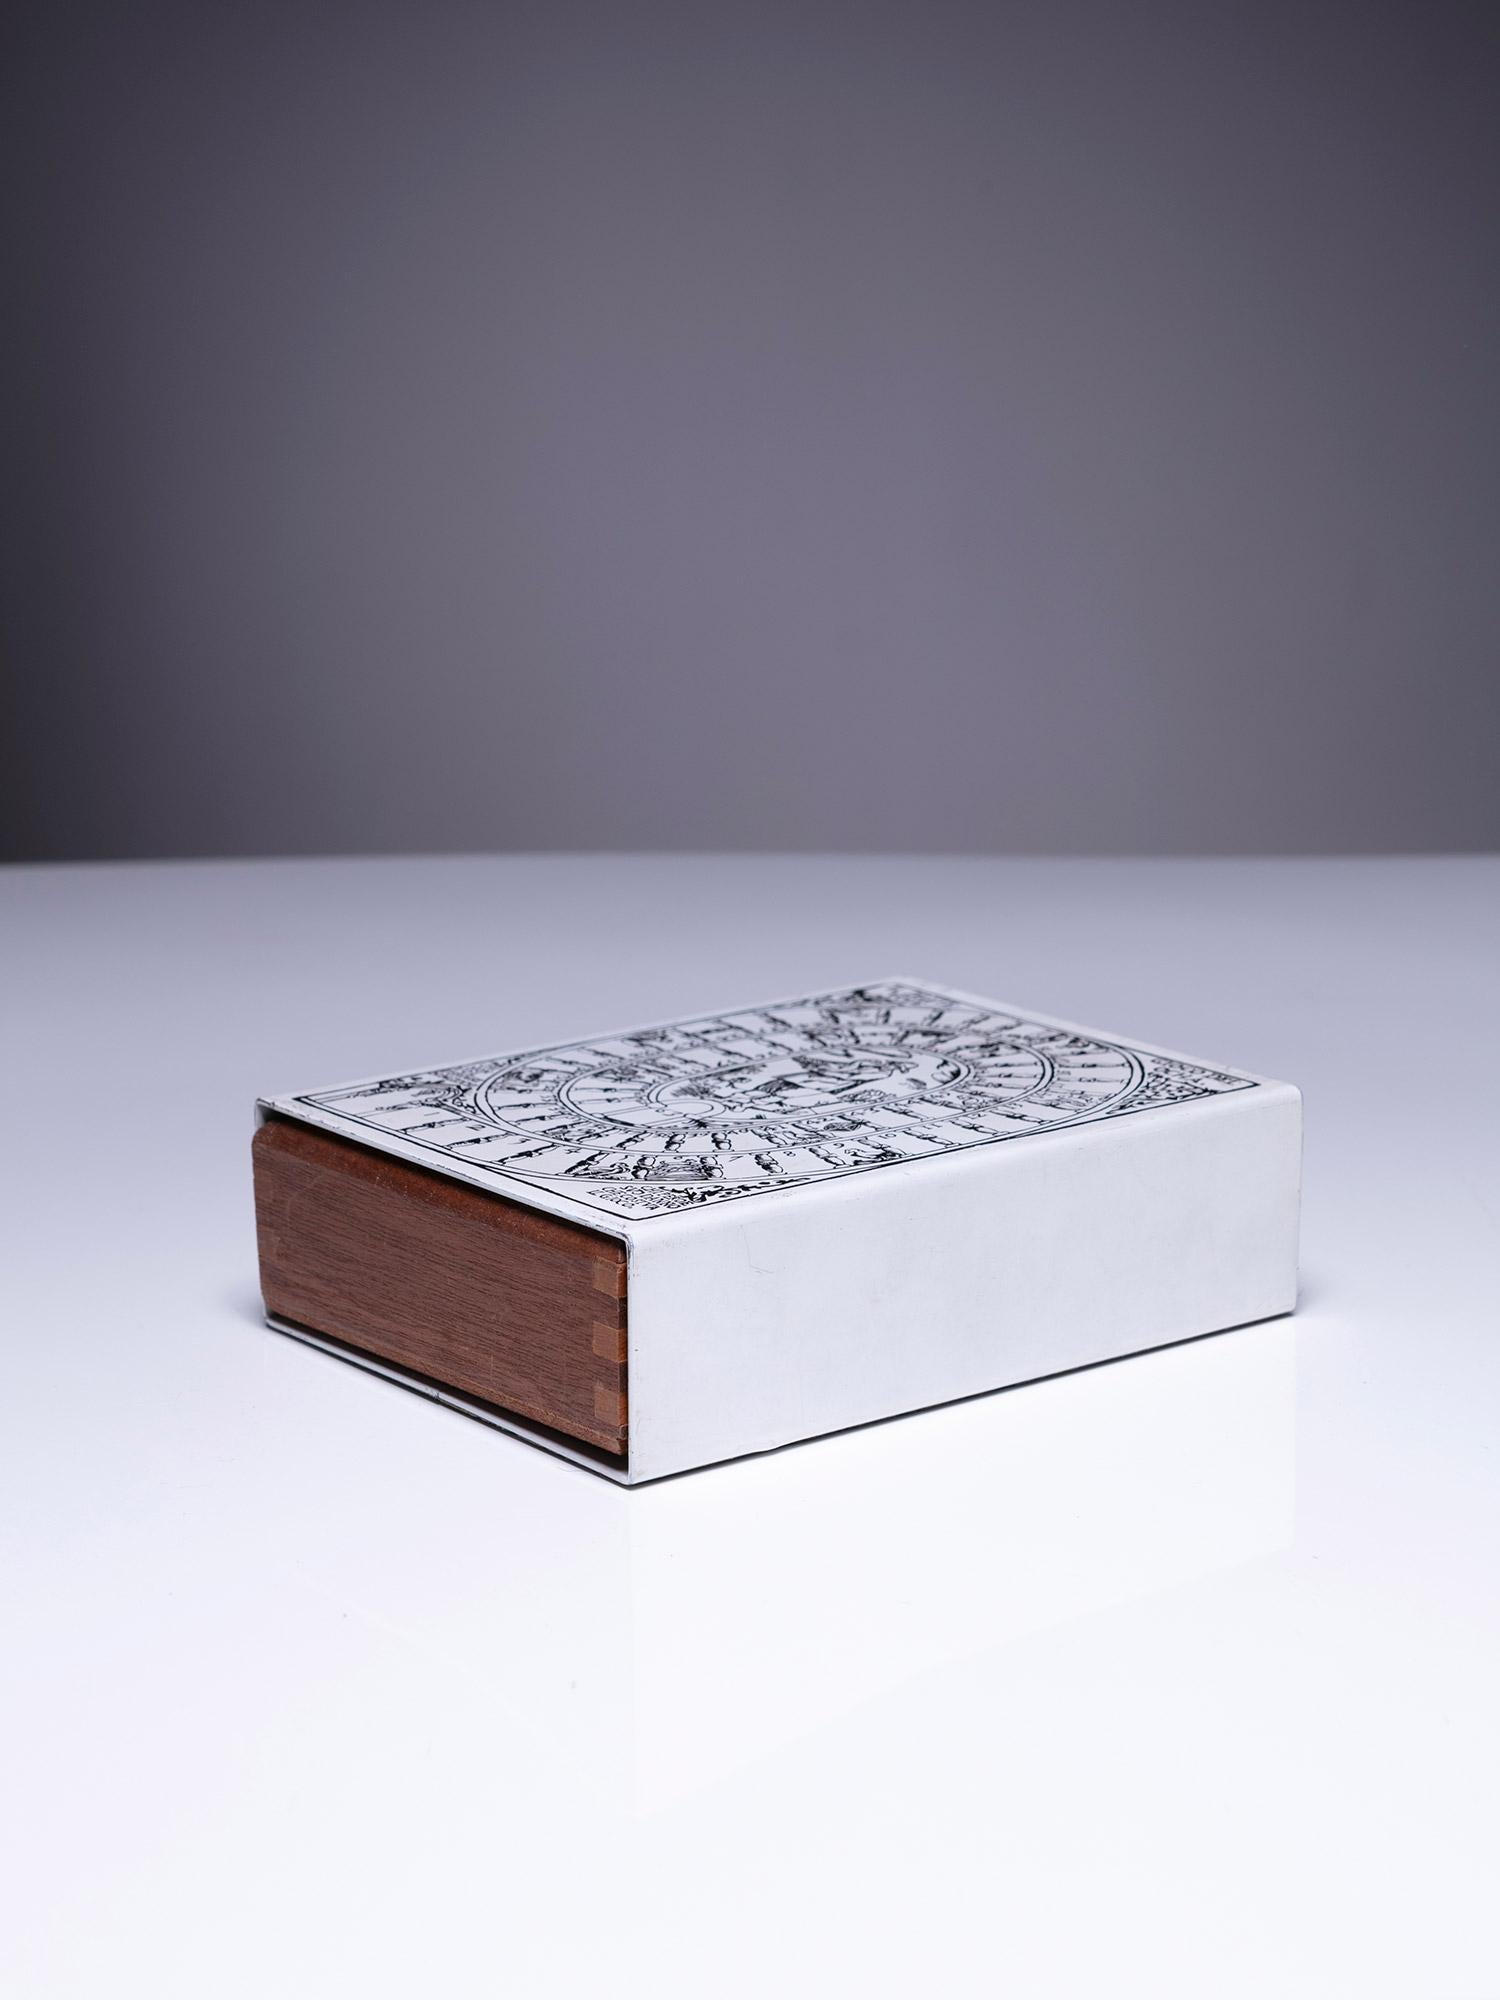 Enameled desk box by Piero Fornasetti.